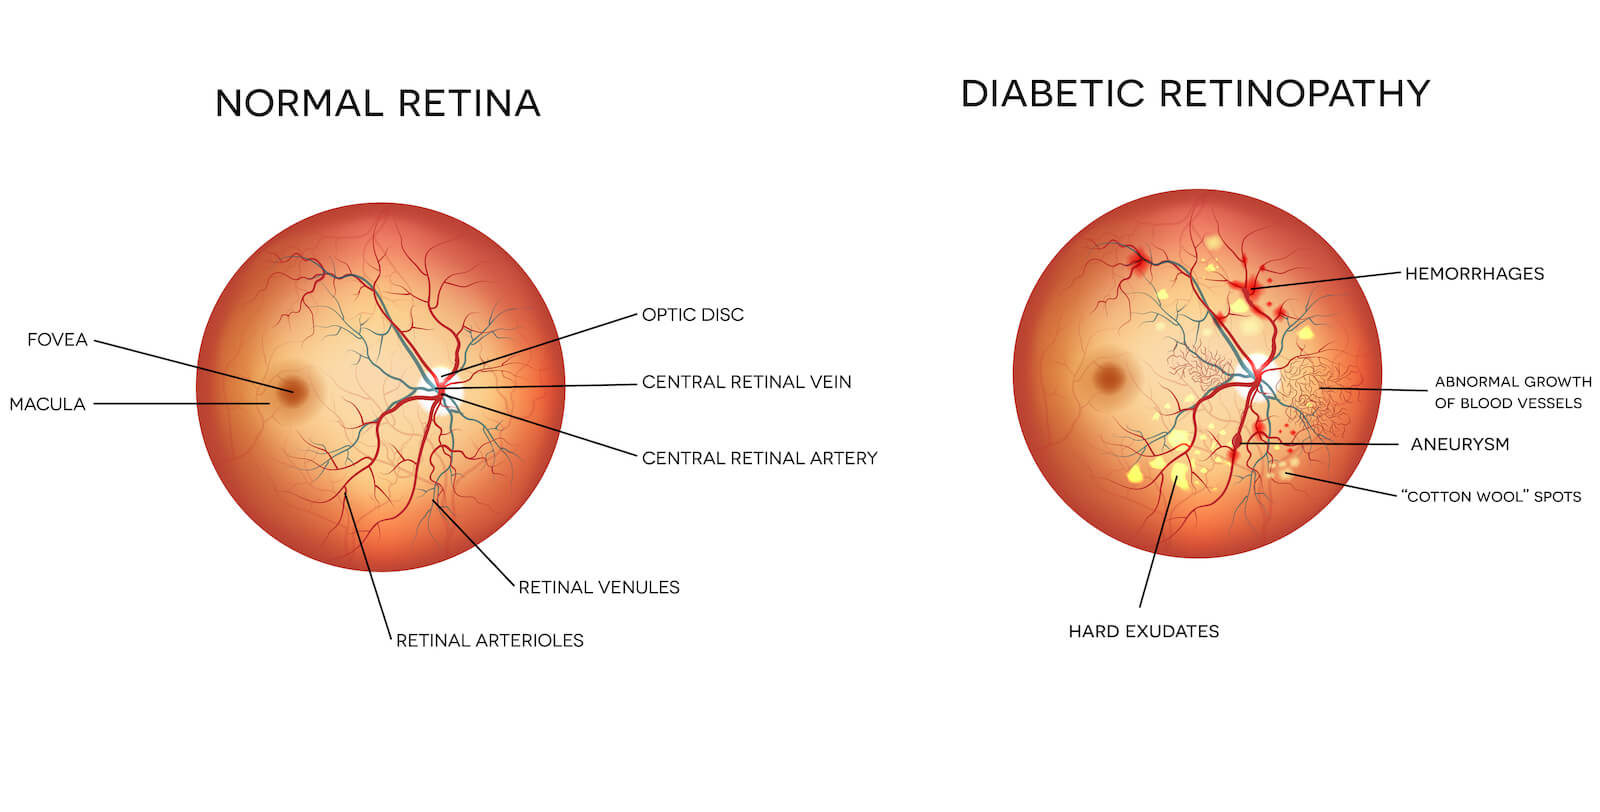 Illustration of Diabetic Retinopathy